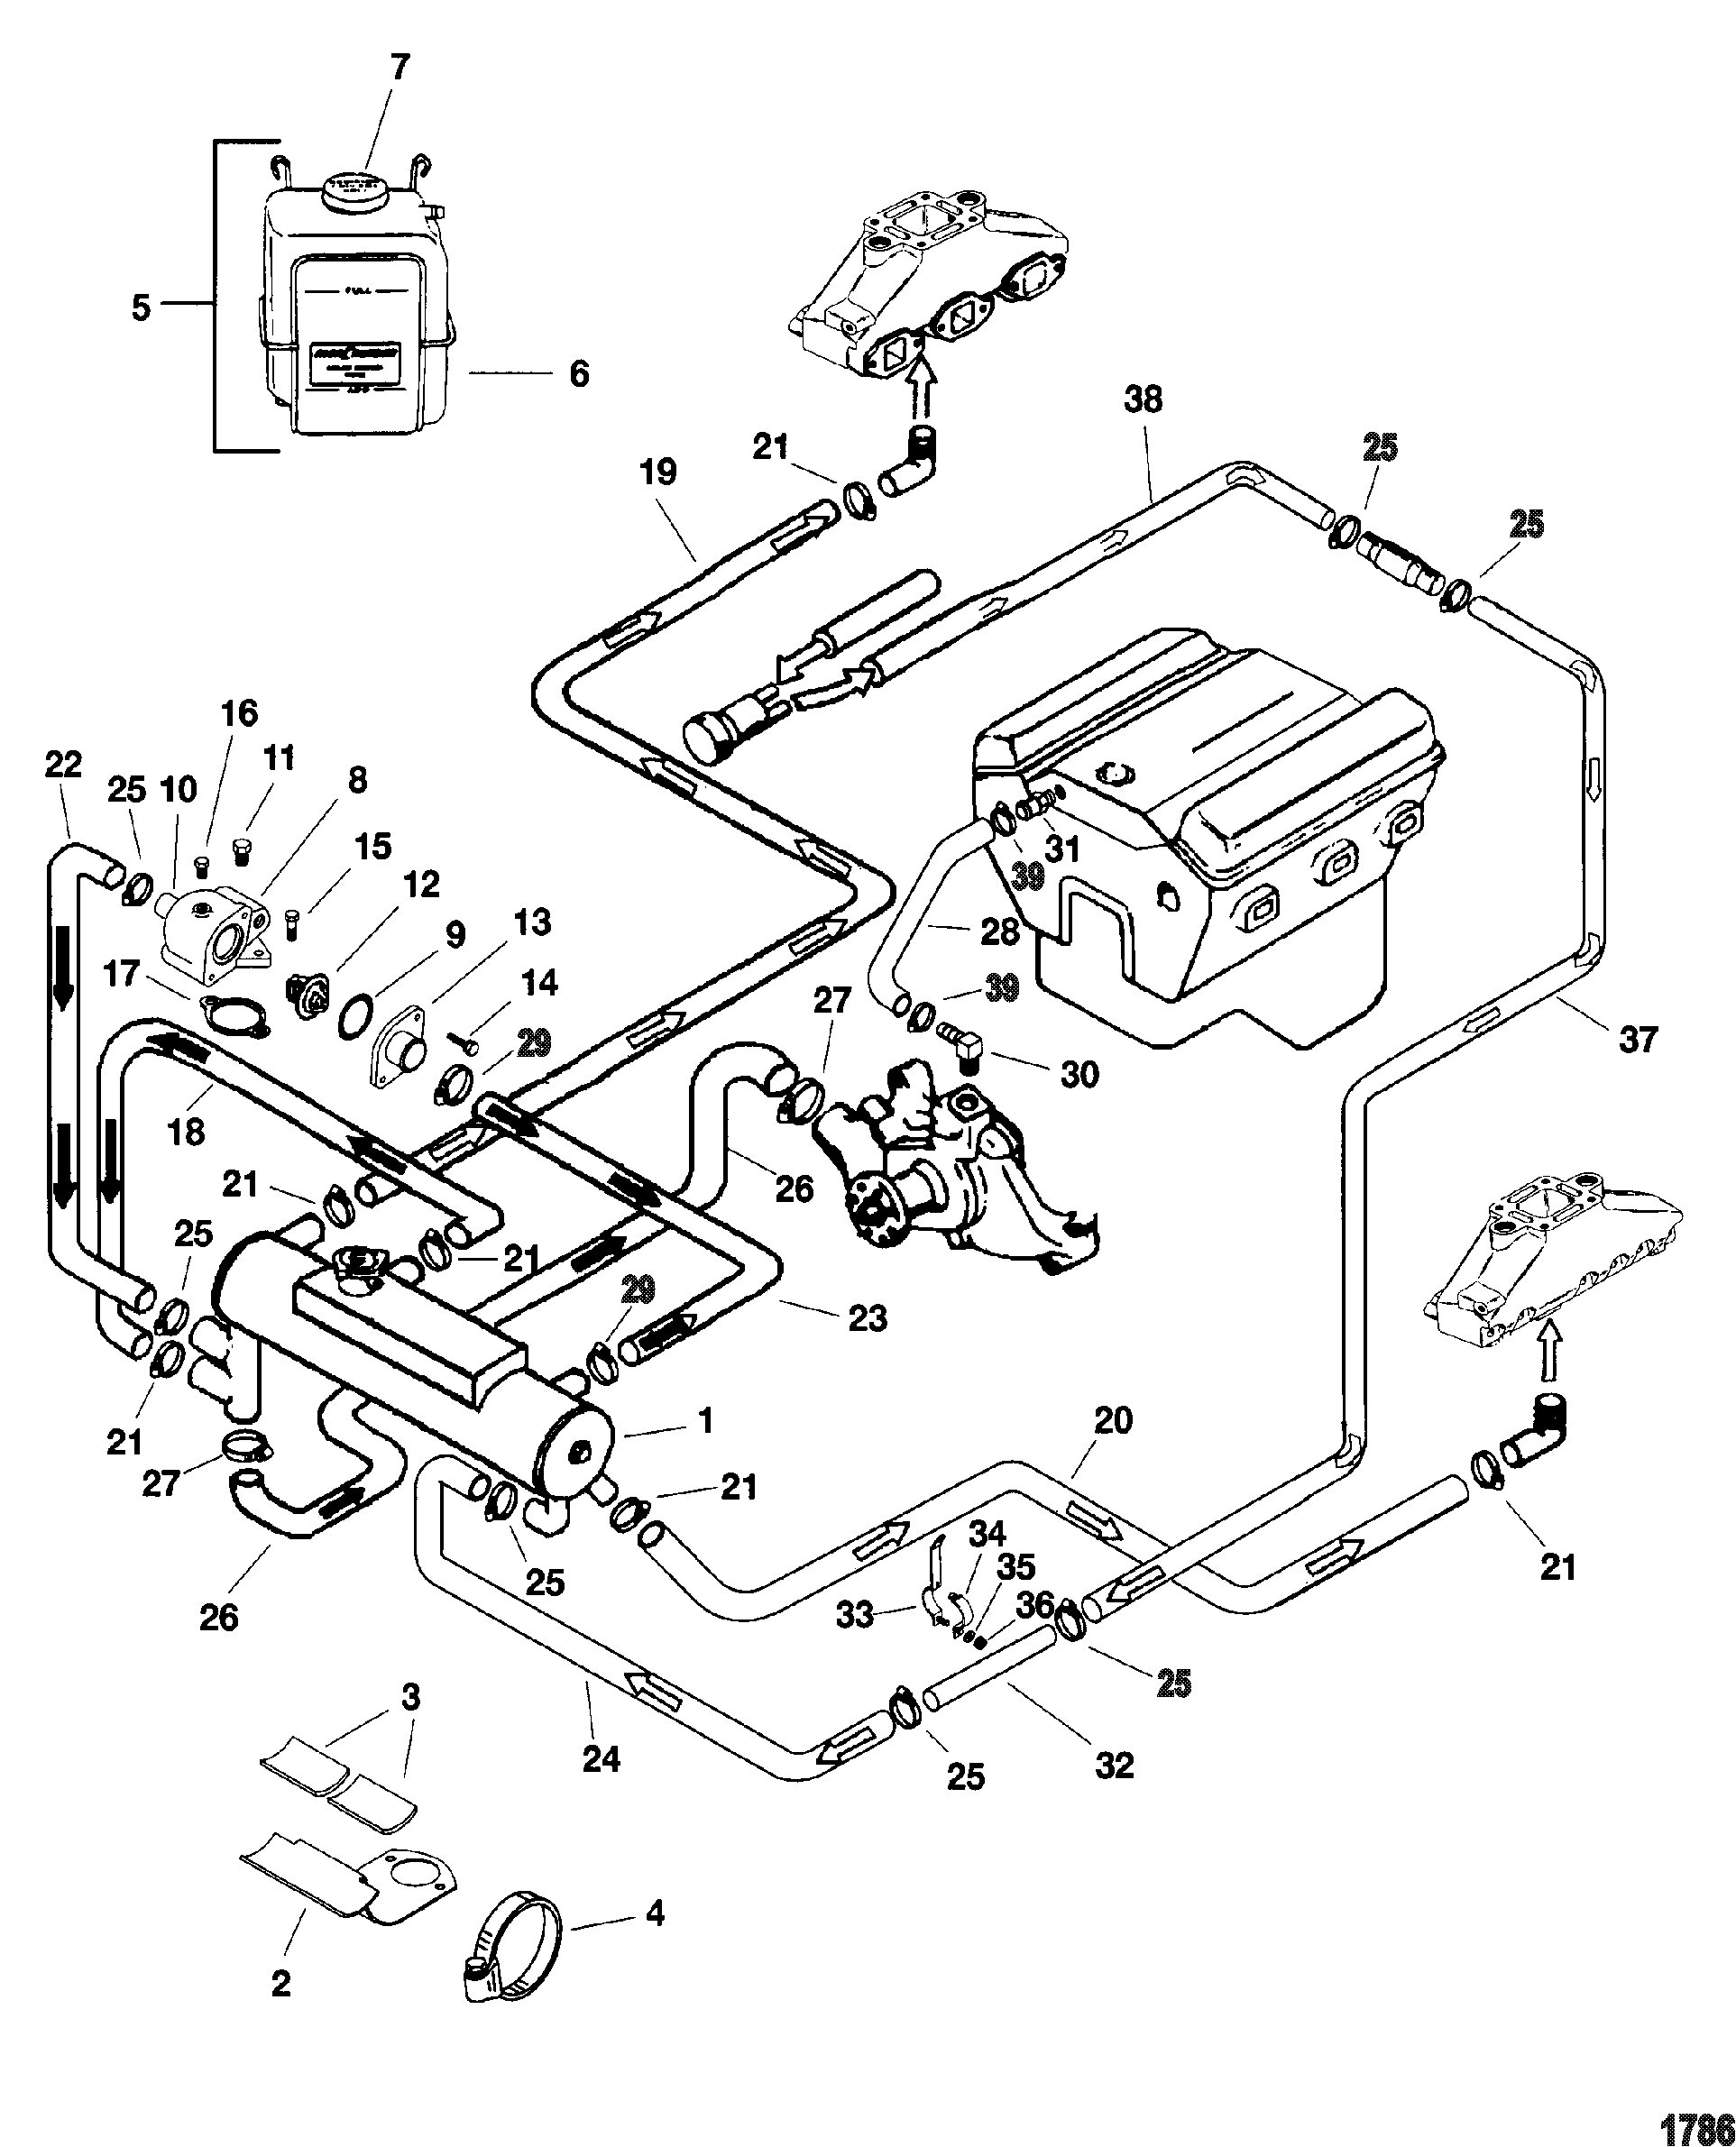 Toyota V6 3 0 Efi Engine Diagram Tundra Engine Diagram 2001 Wiring Wiring Diagrams Instructions Of Toyota V6 3 0 Efi Engine Diagram